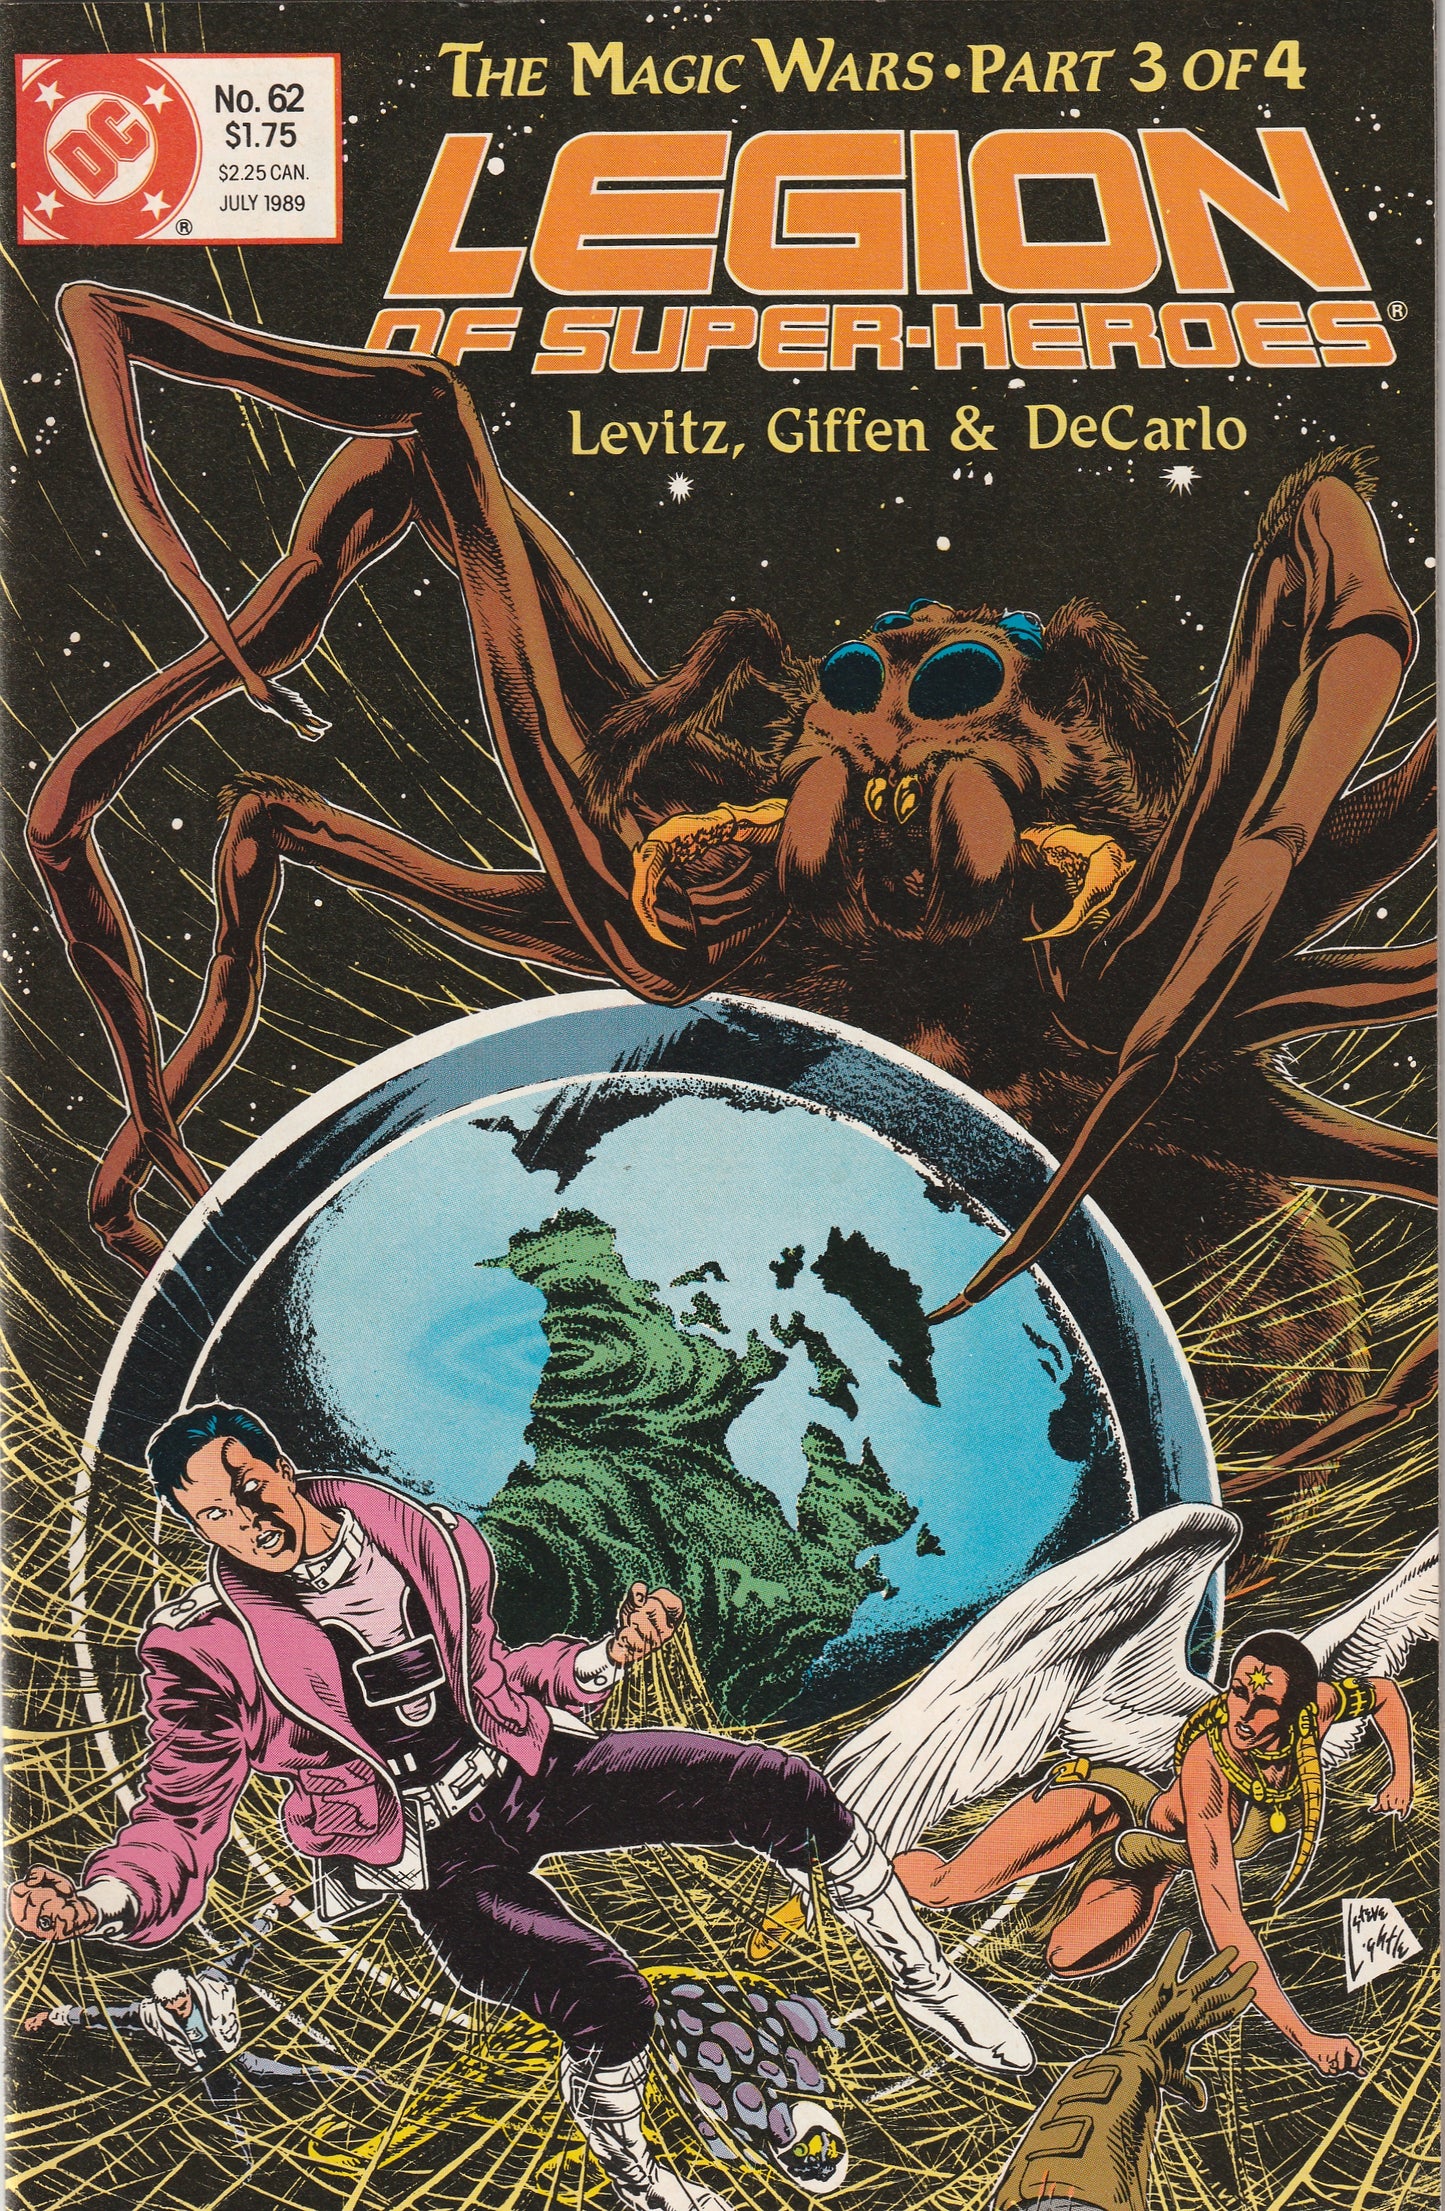 Legion of Super-Heroes #62 (1989) - Death of Magnetic Kid